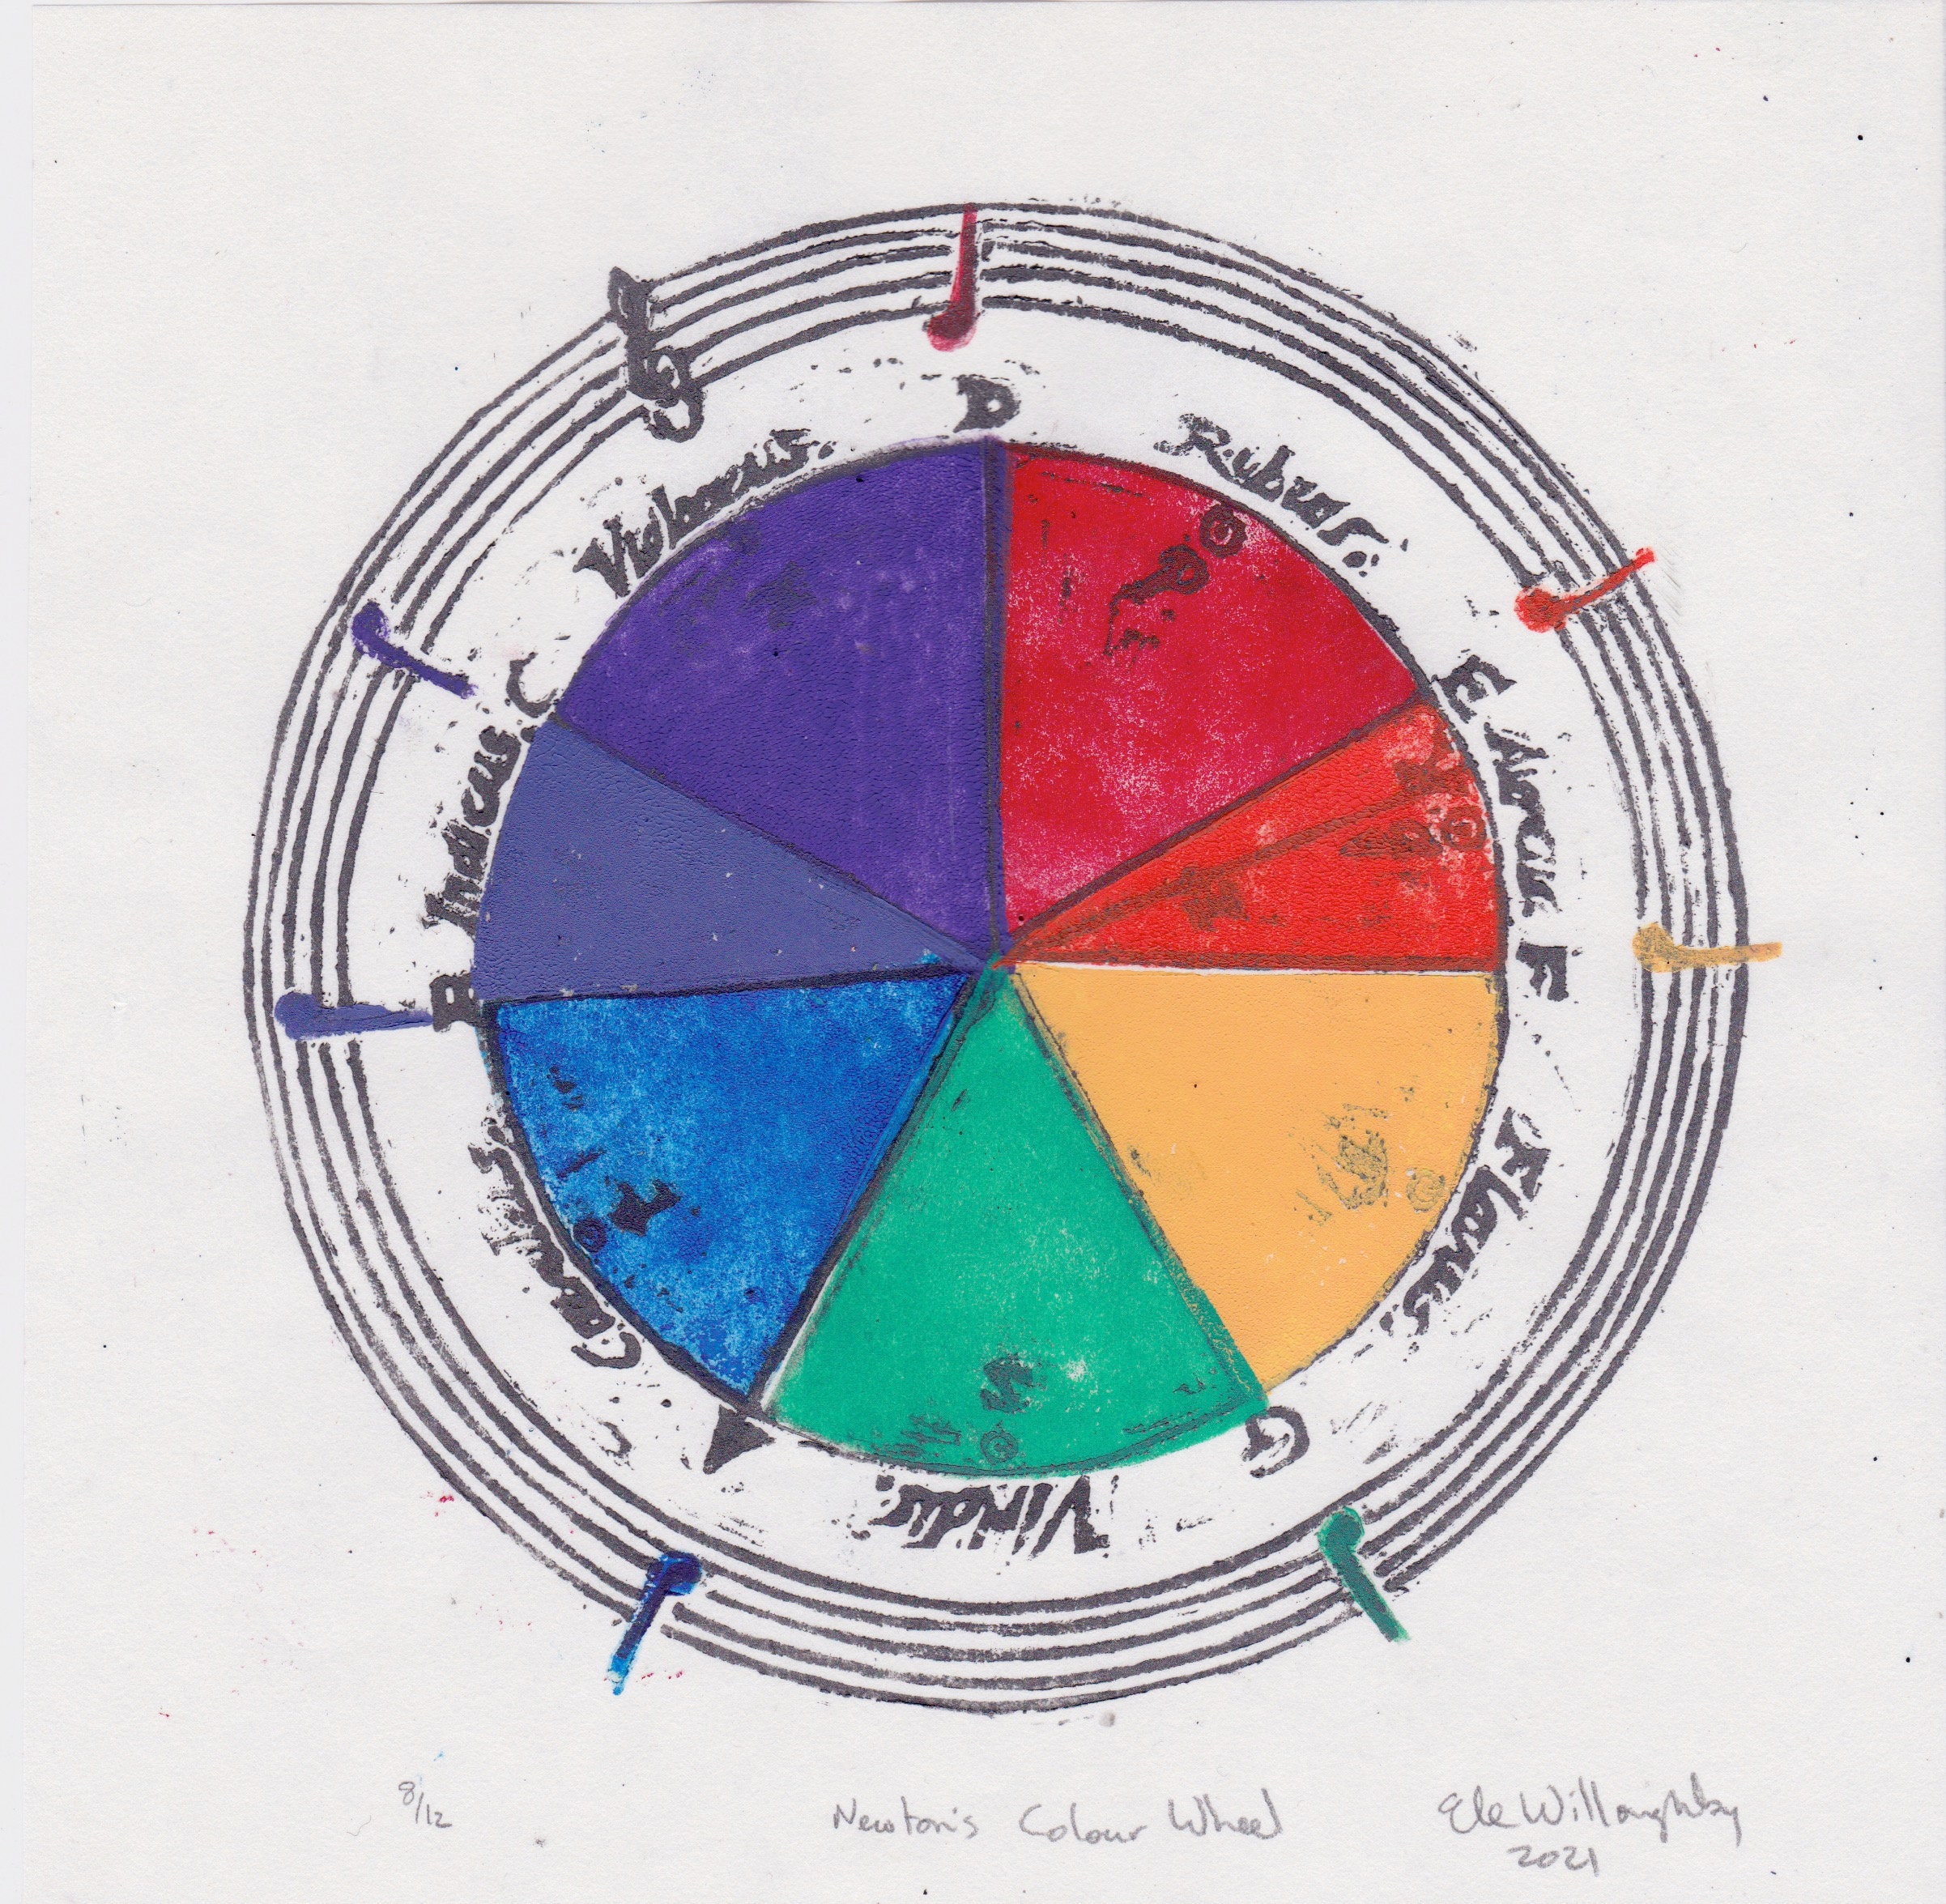 Sir Isaac Newton's Influence on the Color Wheel